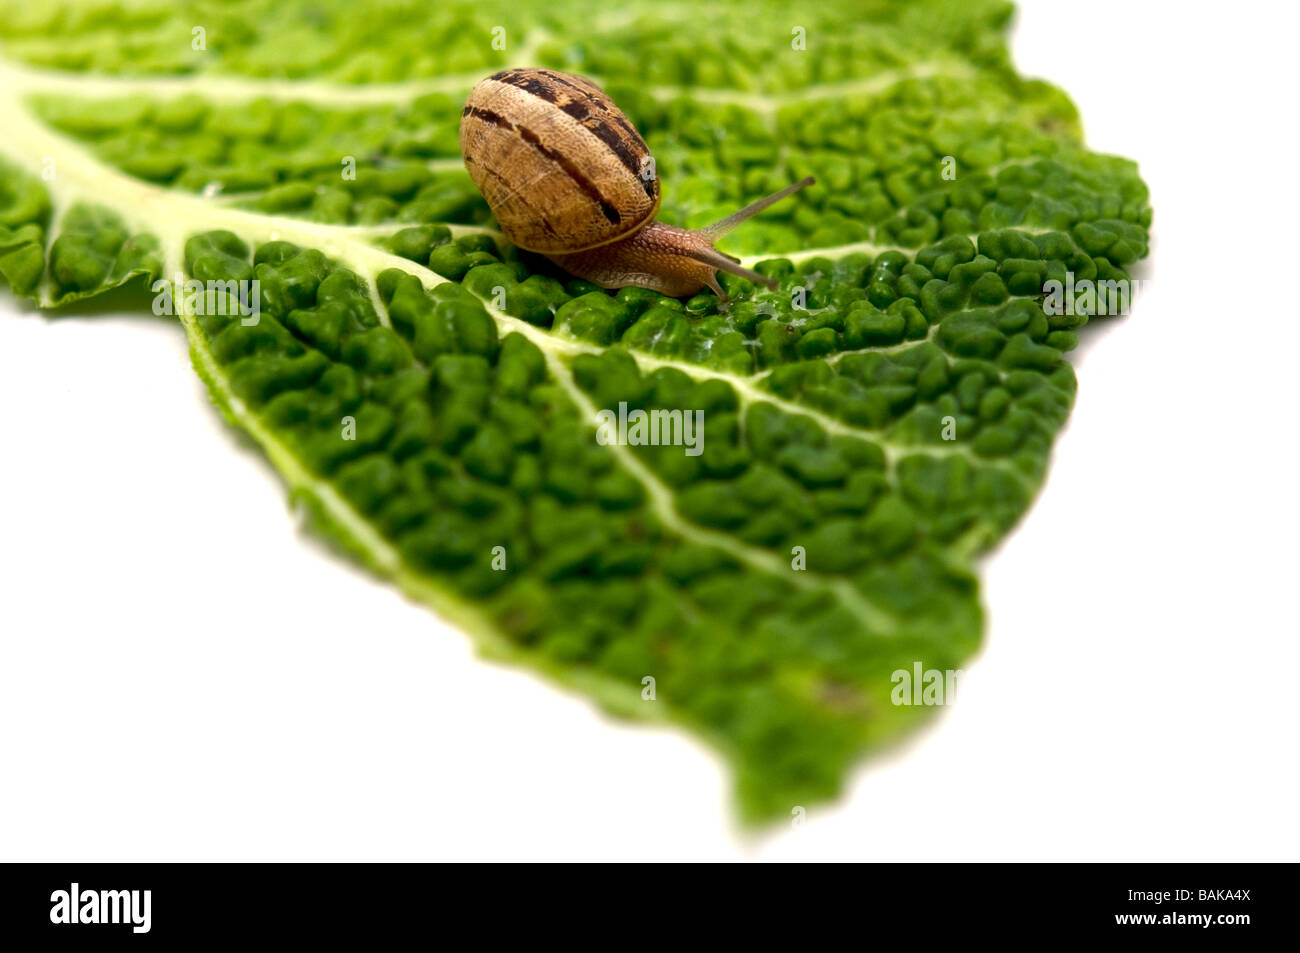 A snail Helix pomatia on a leaf on a white background Stock Photo